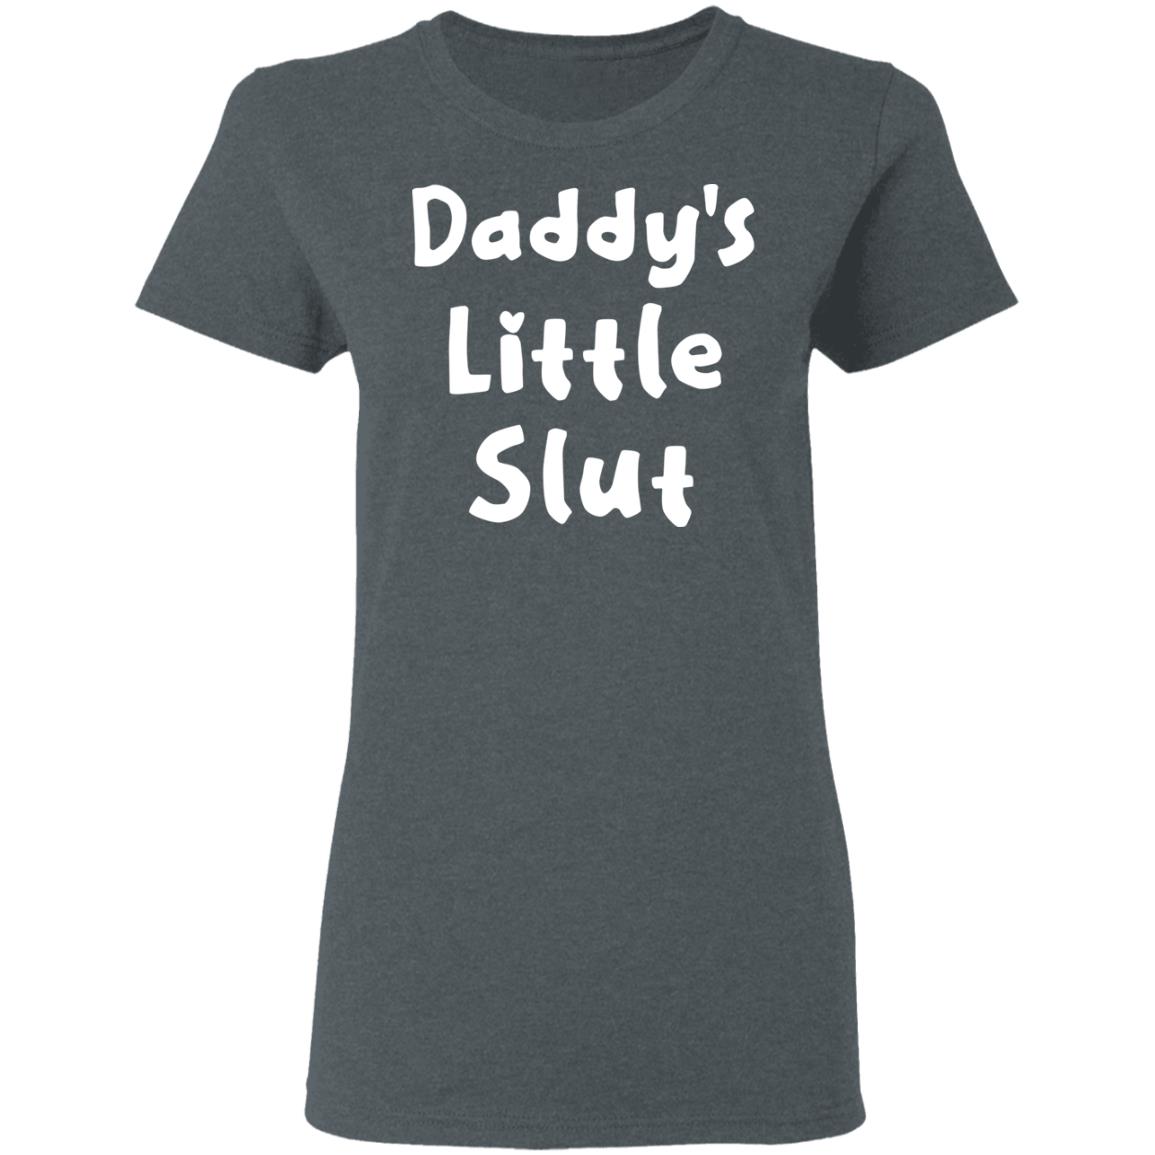 Daddys little slut